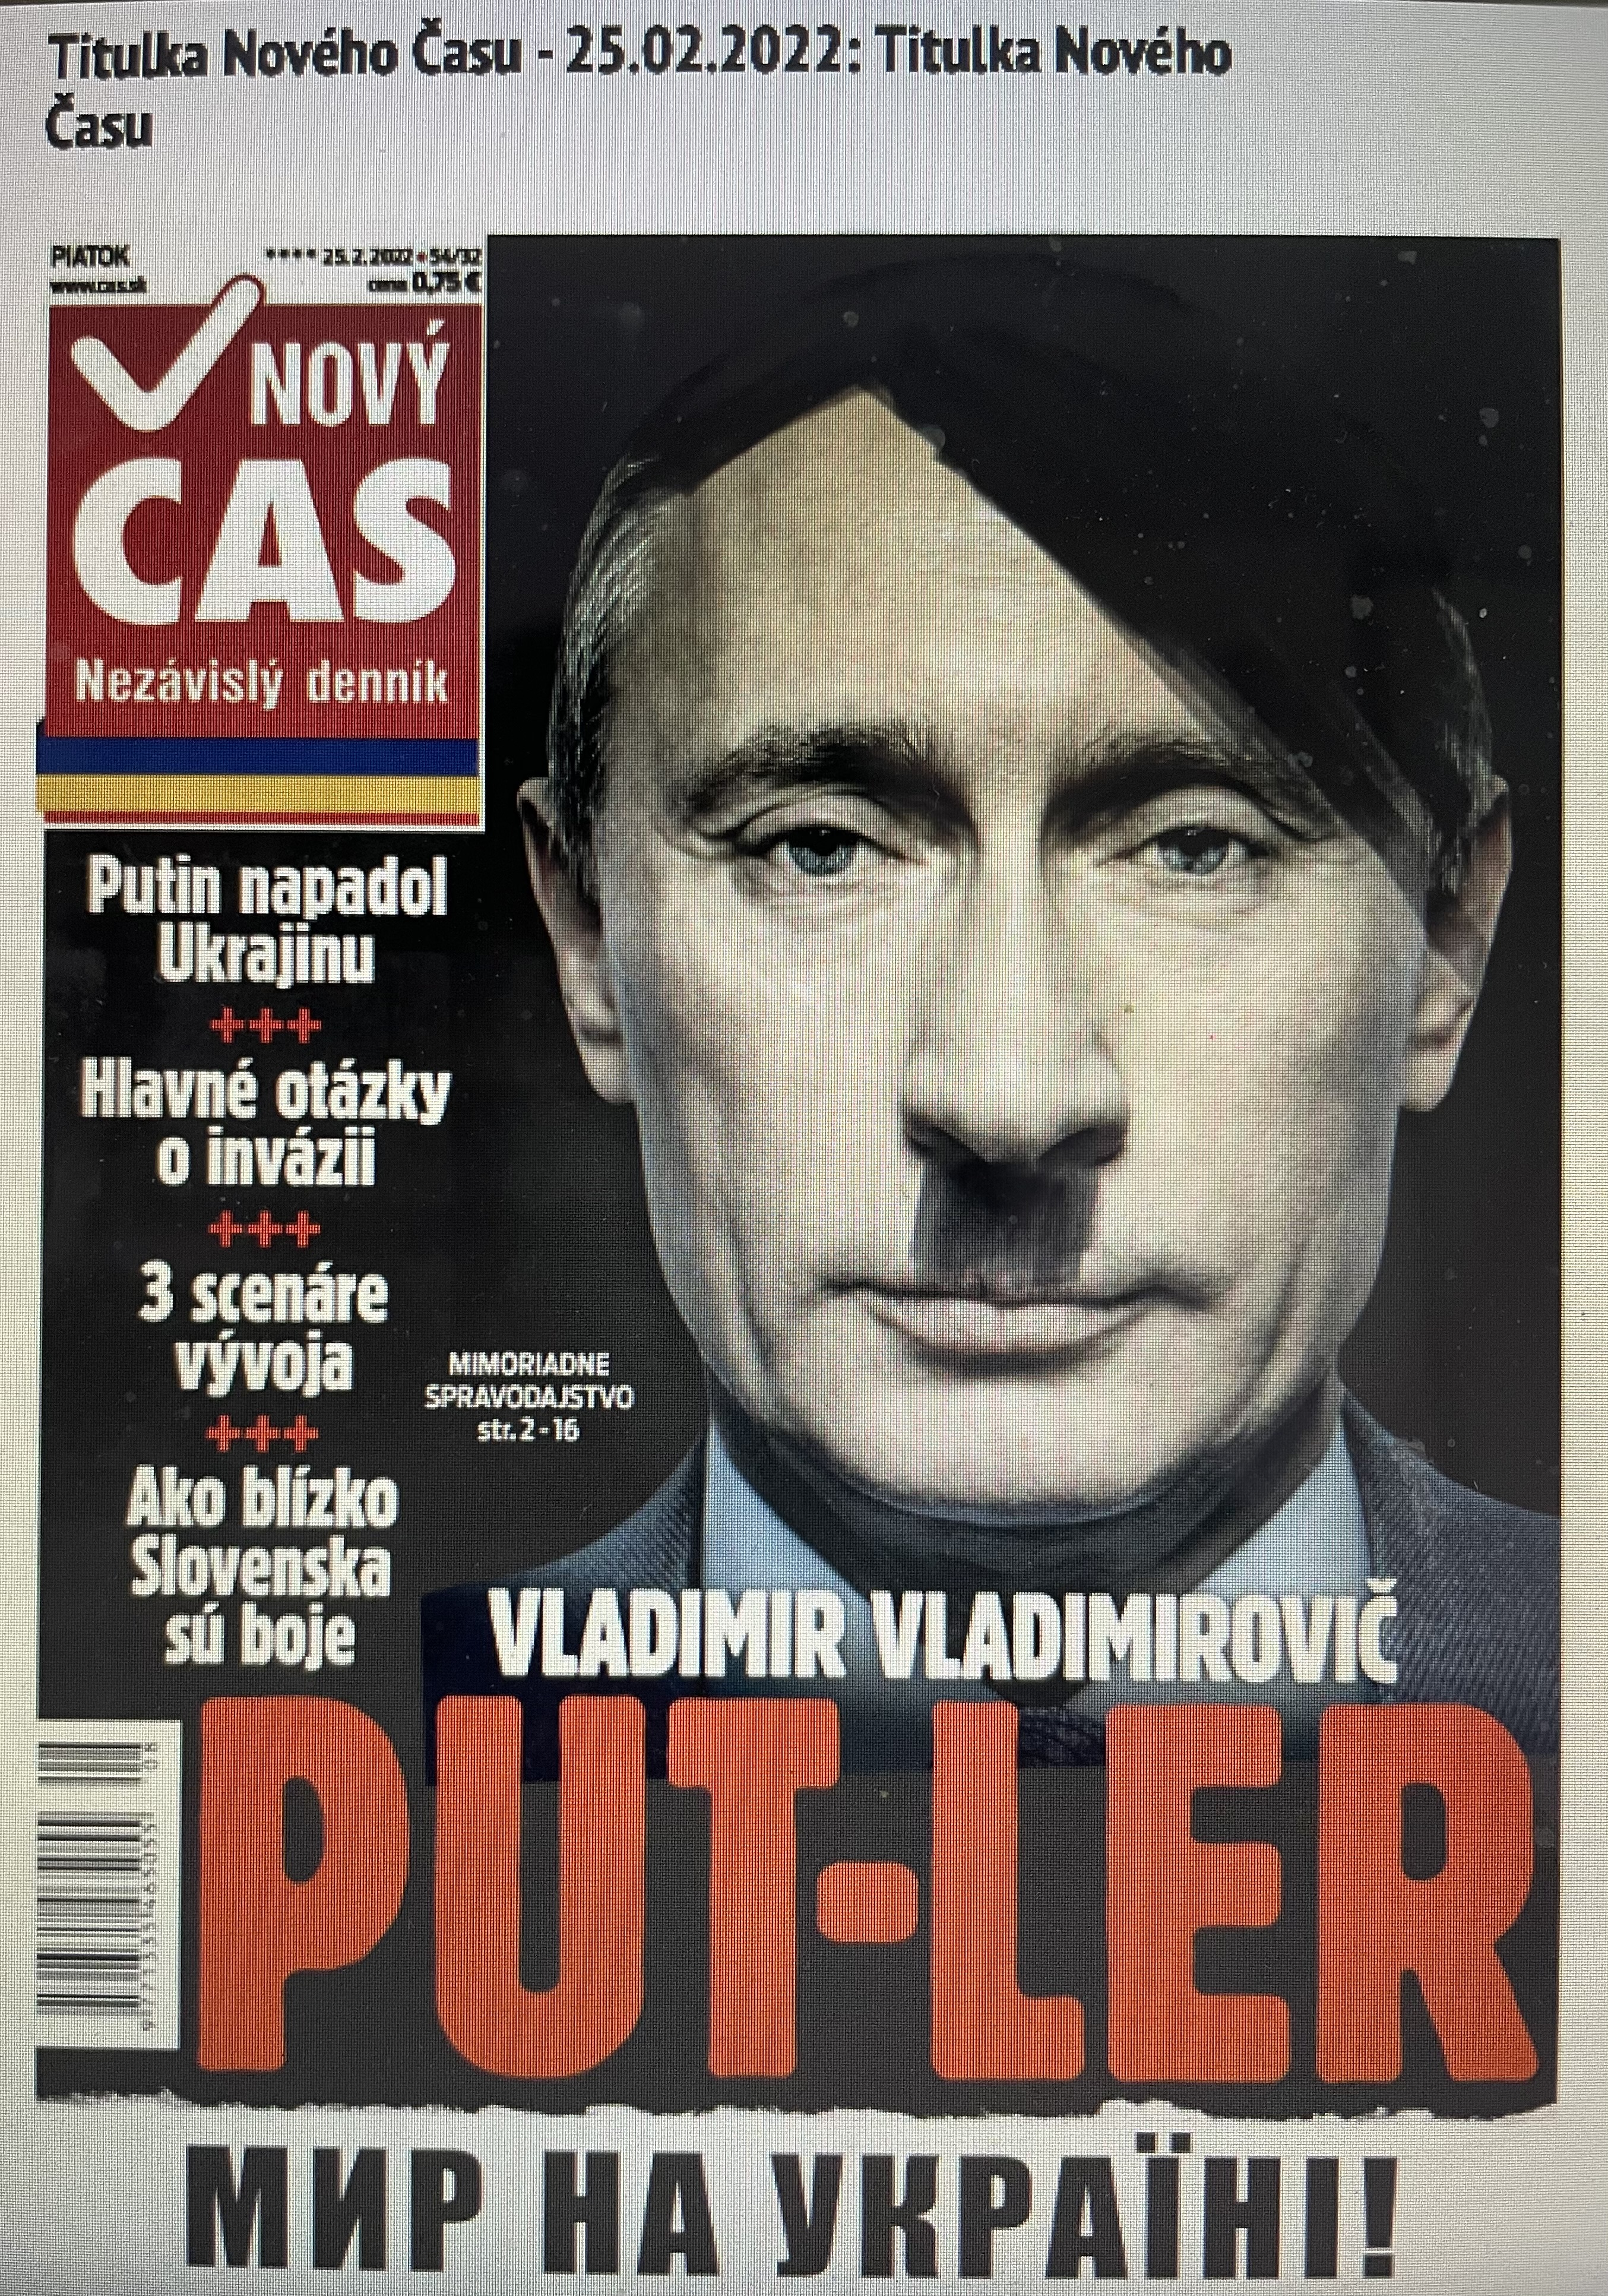 Путин на обложке журнала